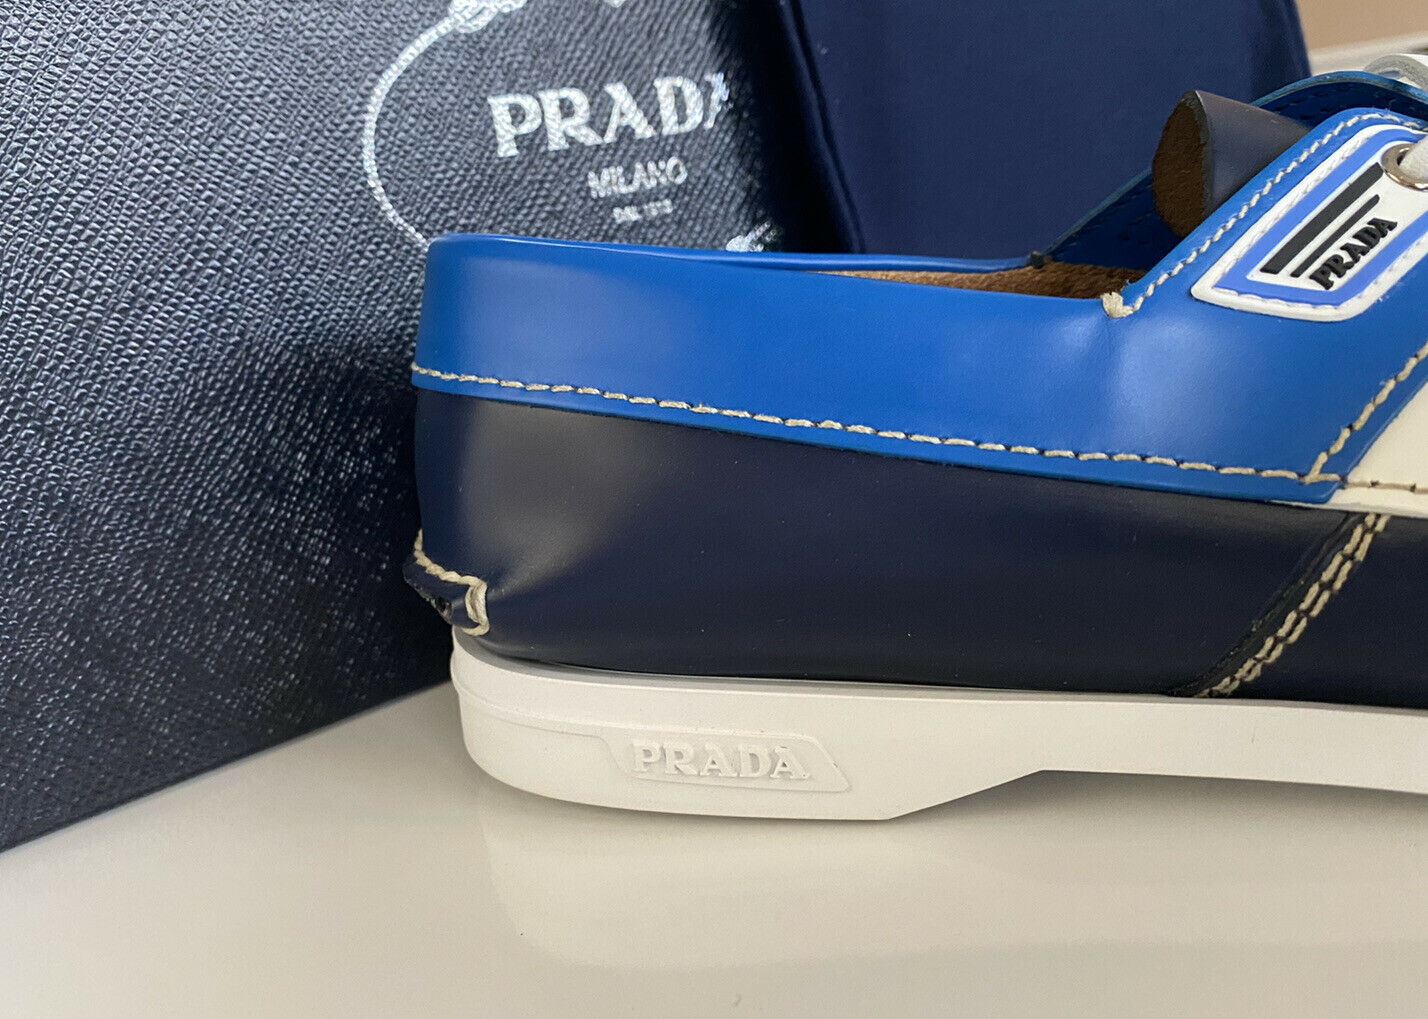 NIB $970 PRADA Milano Mens Blue Leather Boat Shoes 9 US (Prada 8) 2EG270 Italy